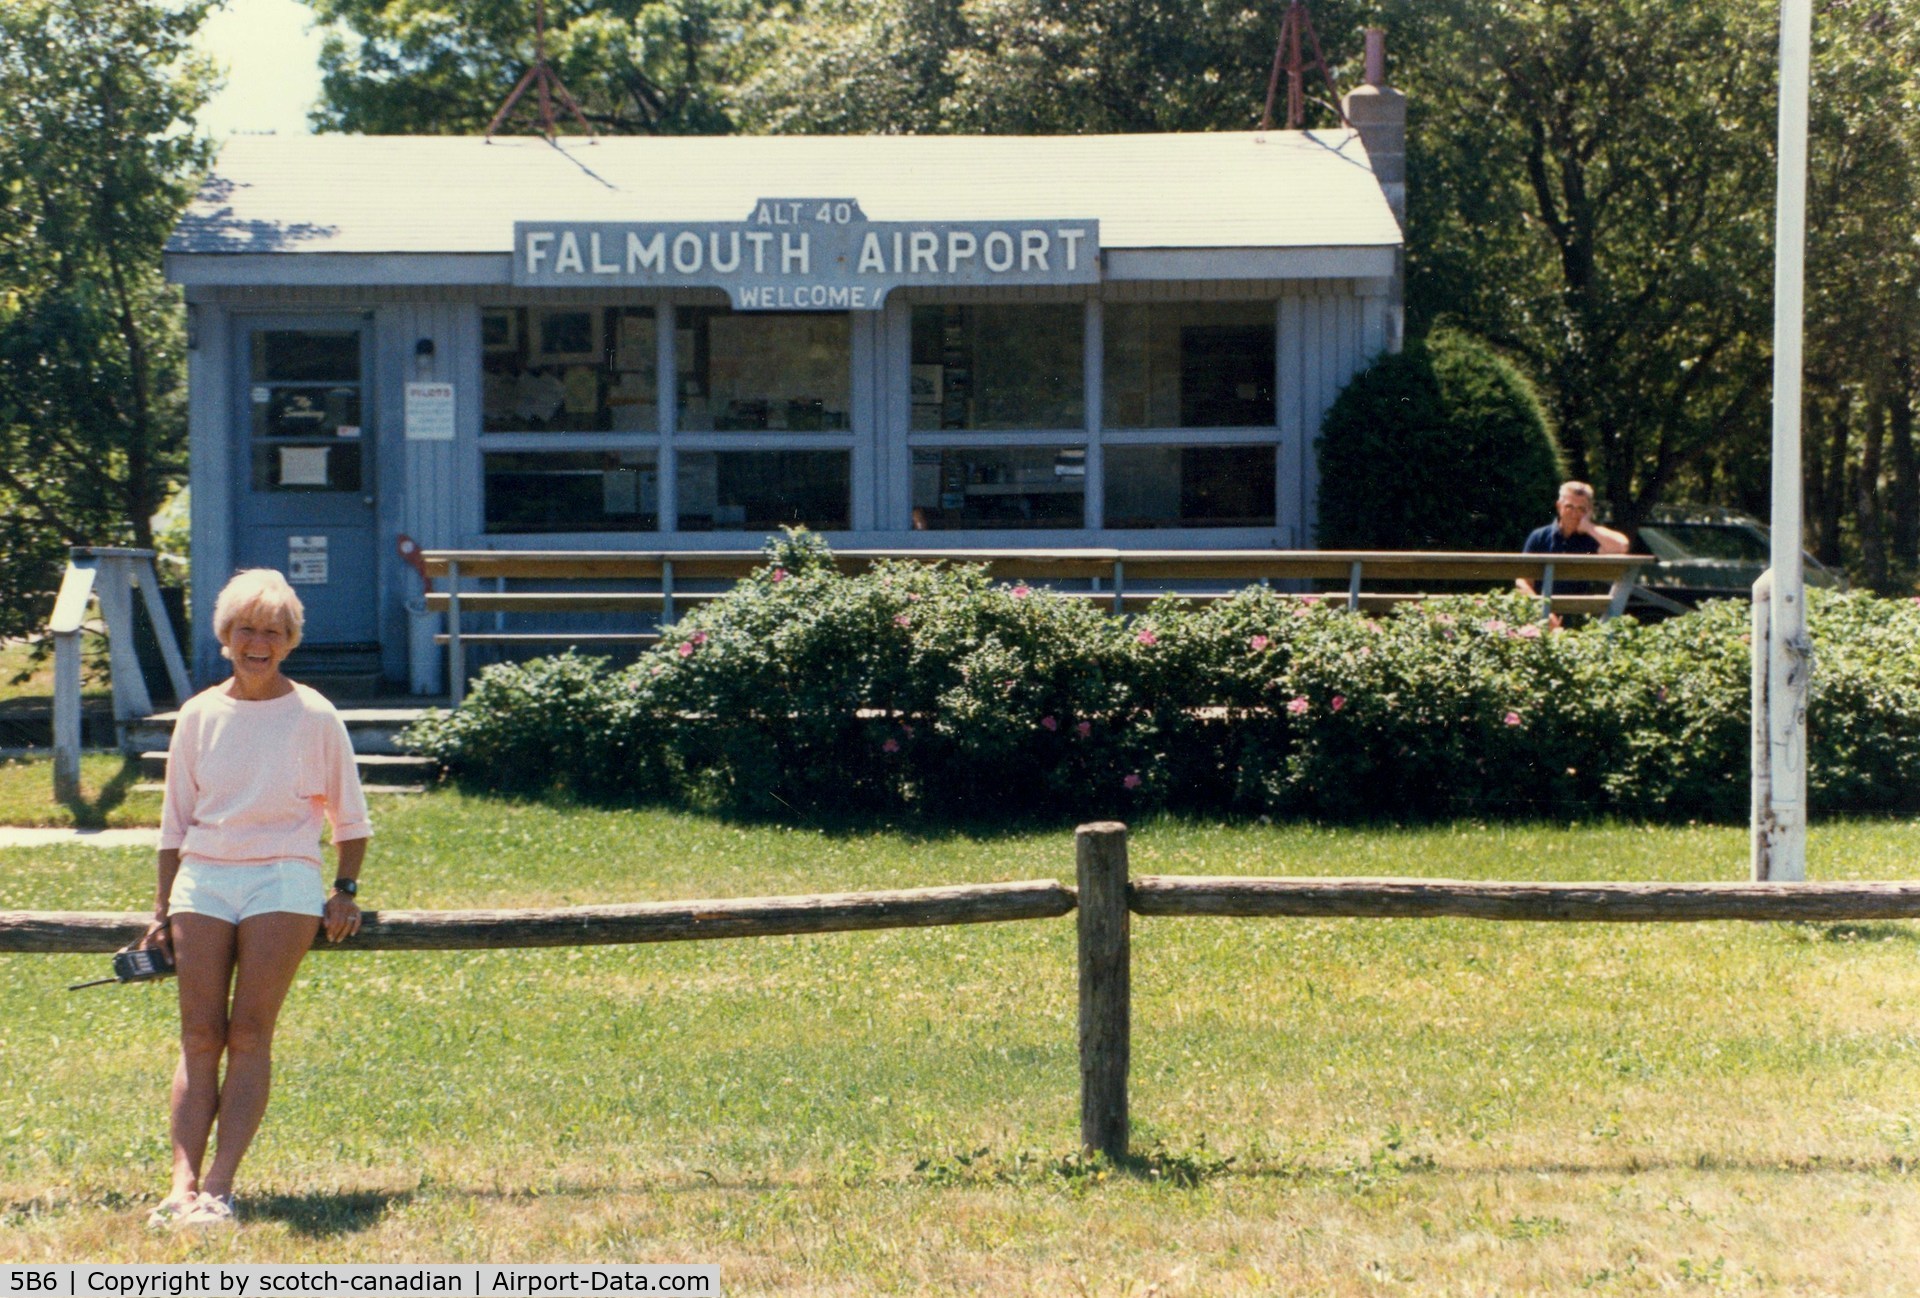 Falmouth Airpark Airport (5B6) - Falmouth Airport, Falmouth, MA - July 1986